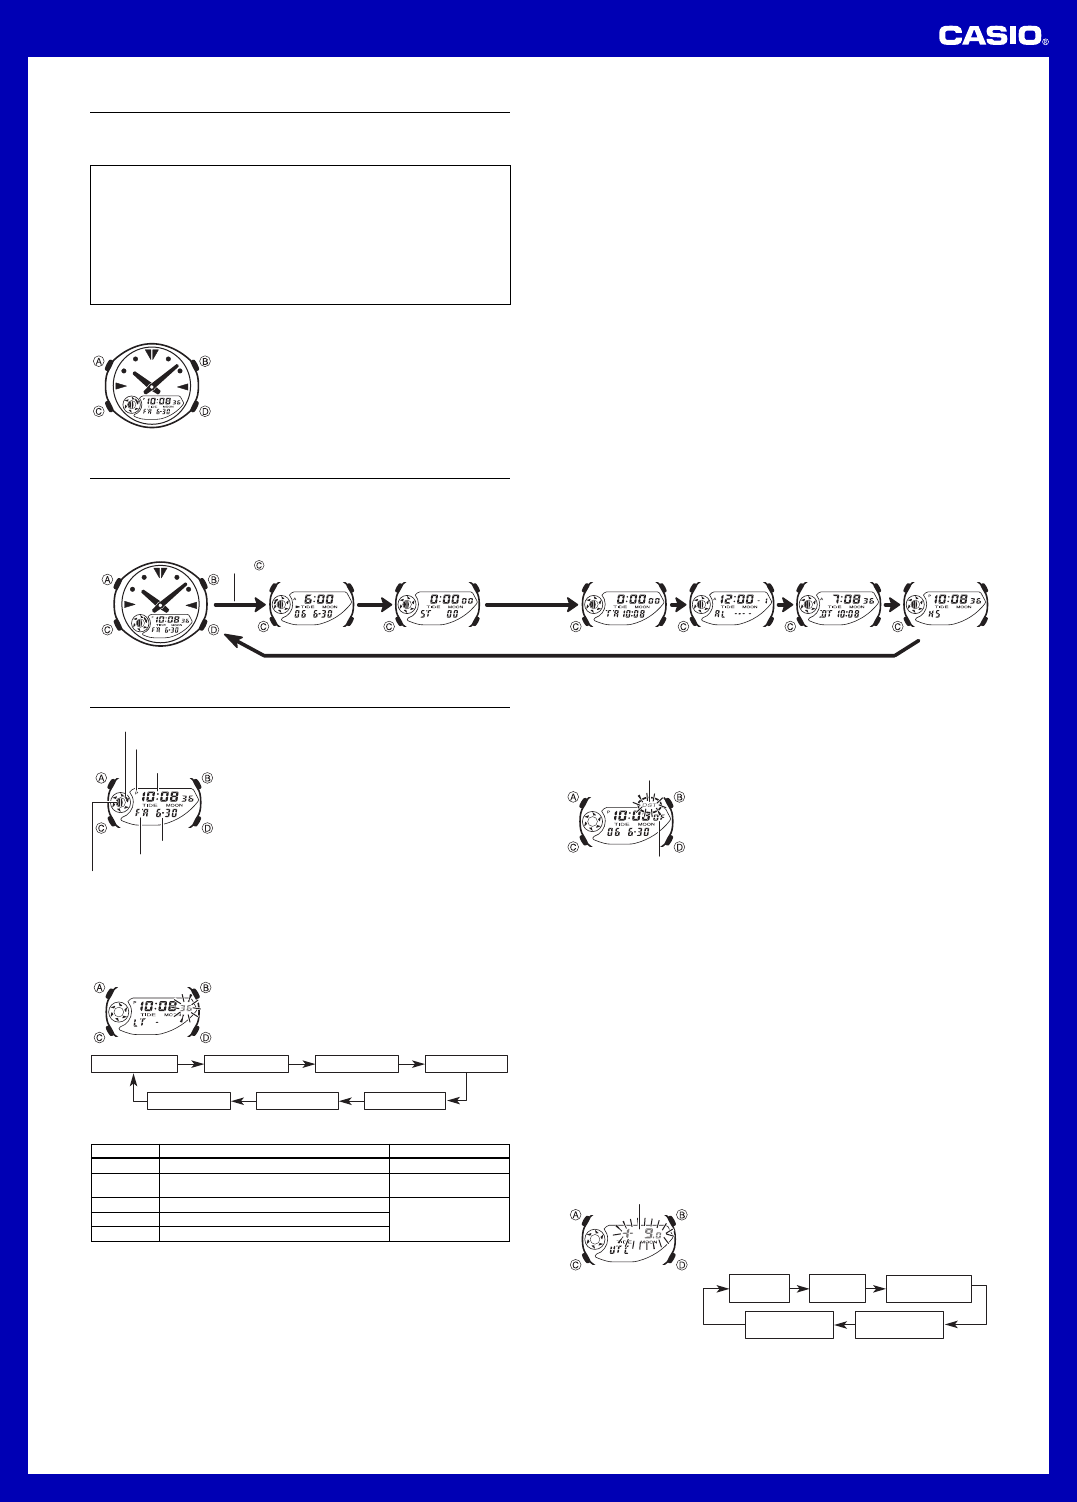 Manual Casio 3796 (page 1 of 4) (English)